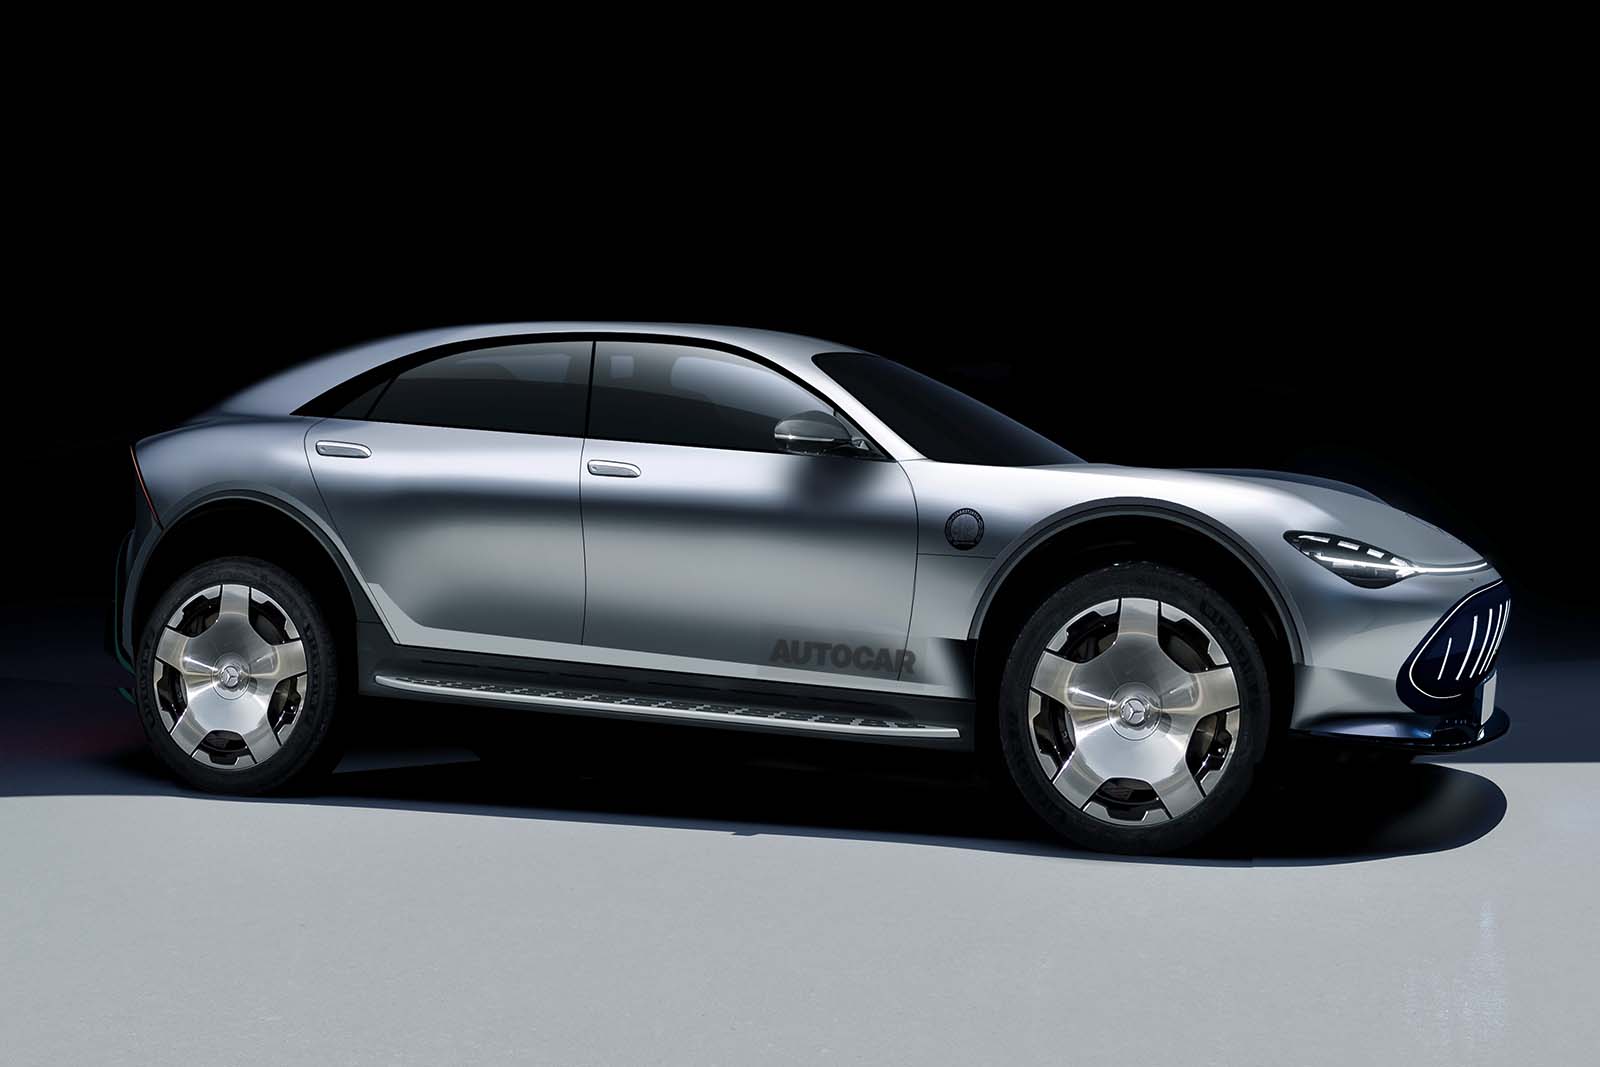 Mercedes-AMG primes 1000bhp super-SUV as next bespoke EV